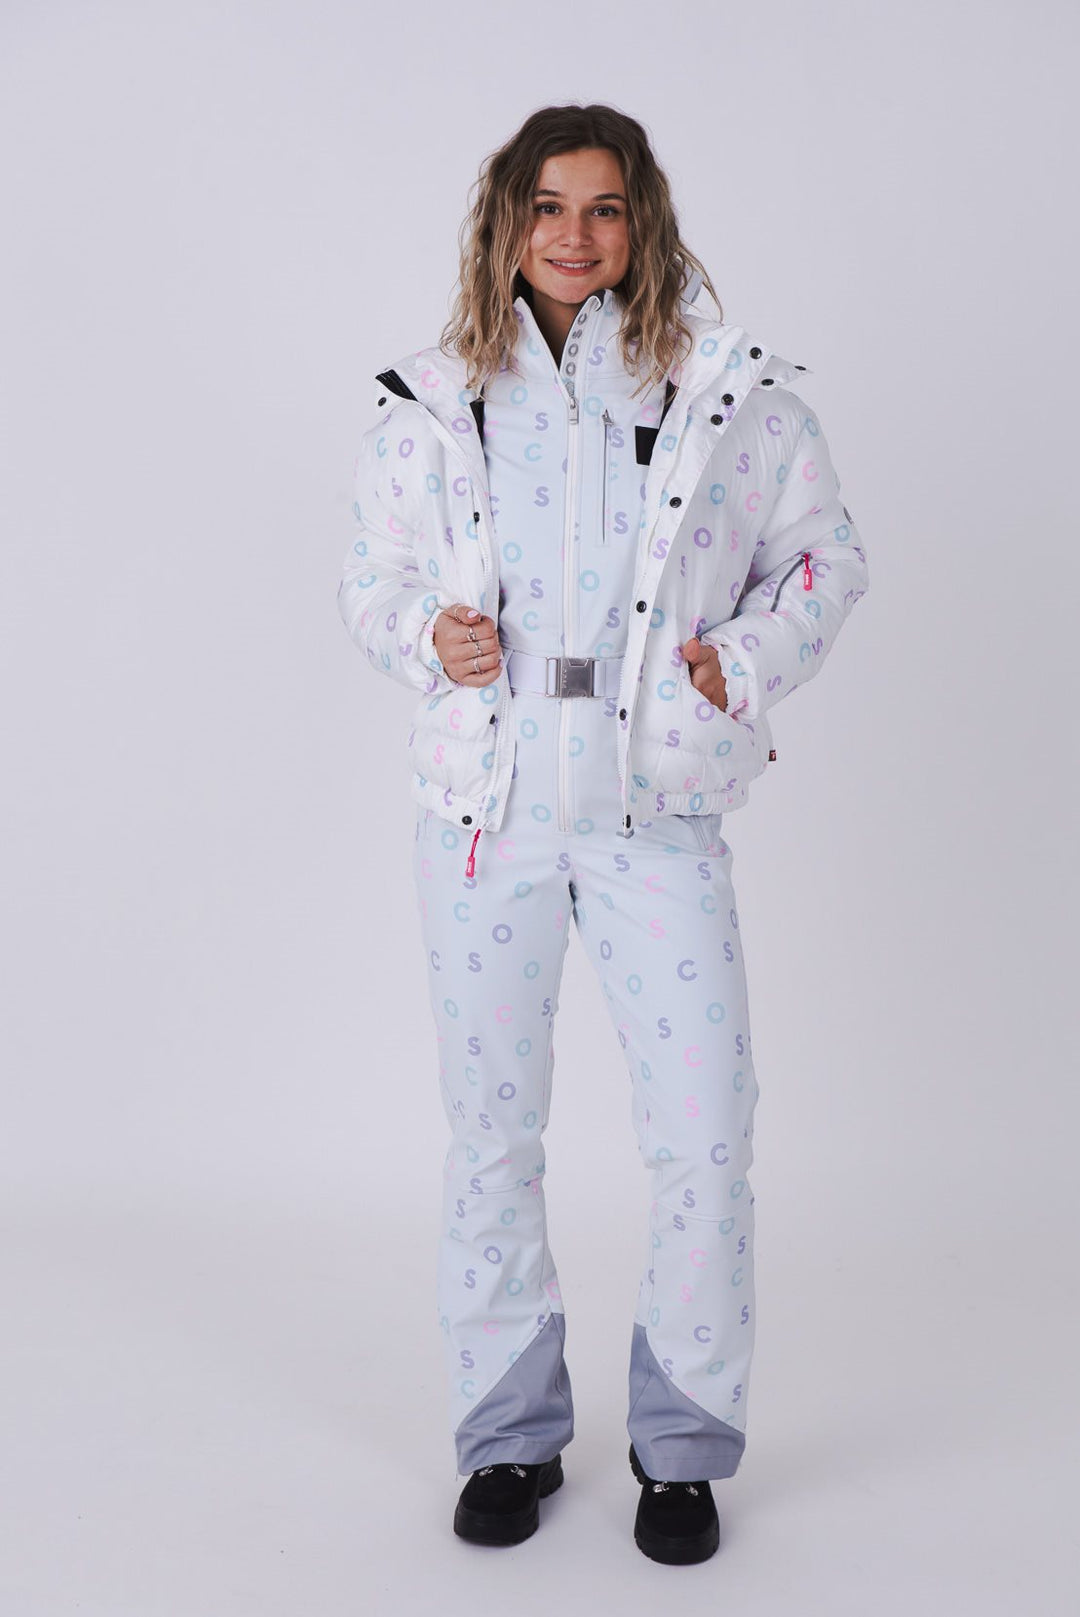 Chic Ski Suit - White OOSC Print